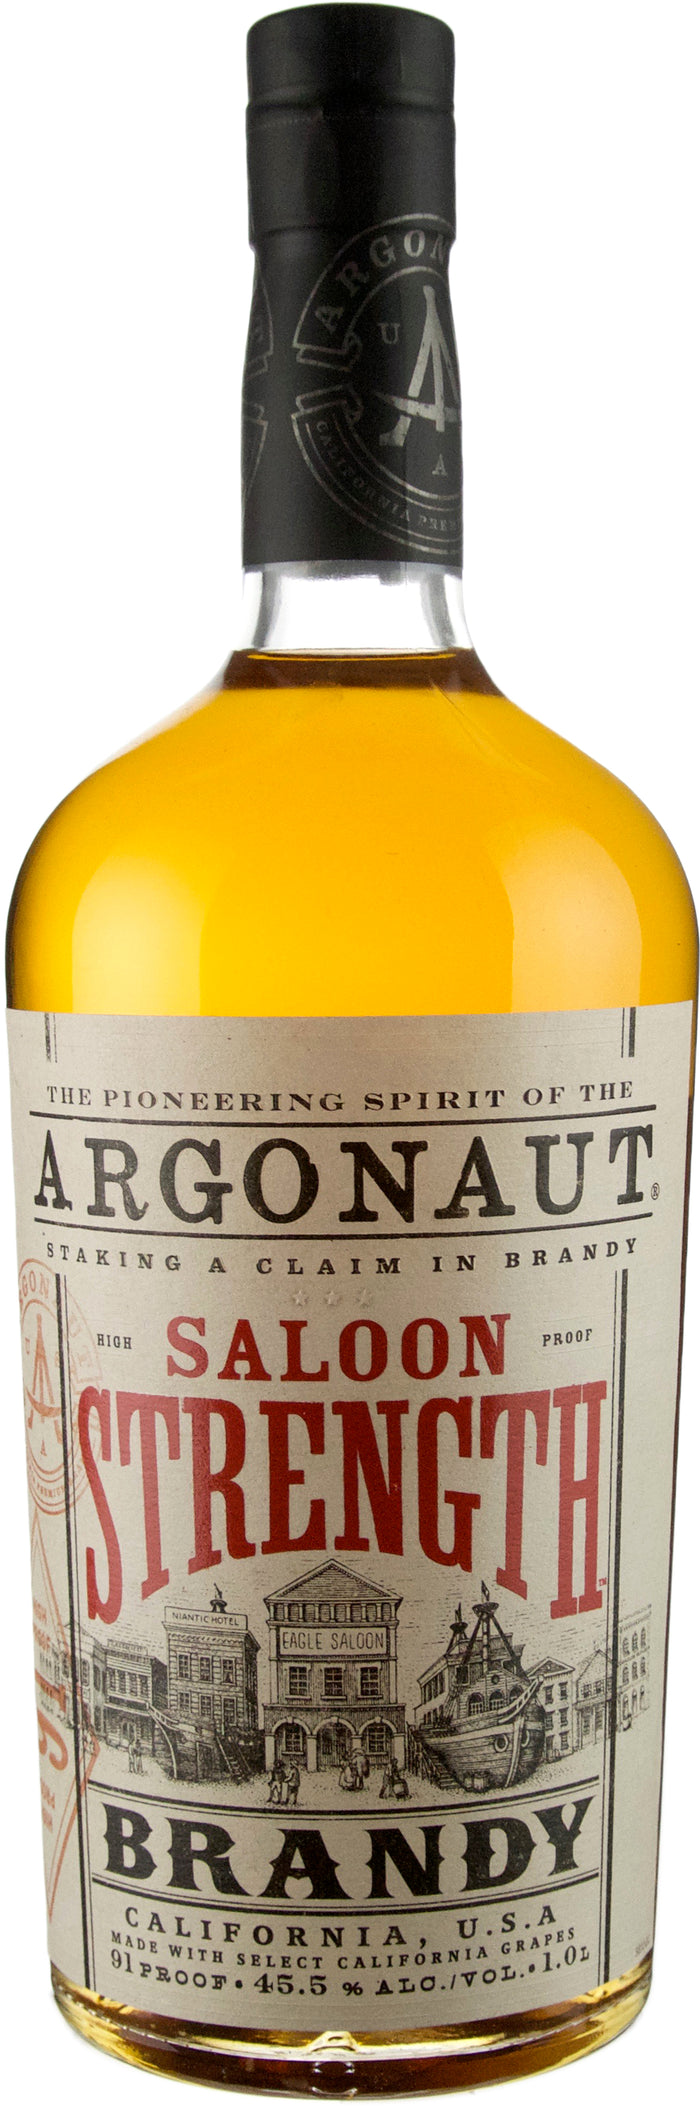 Argonaut Saloon Strength California Brandy